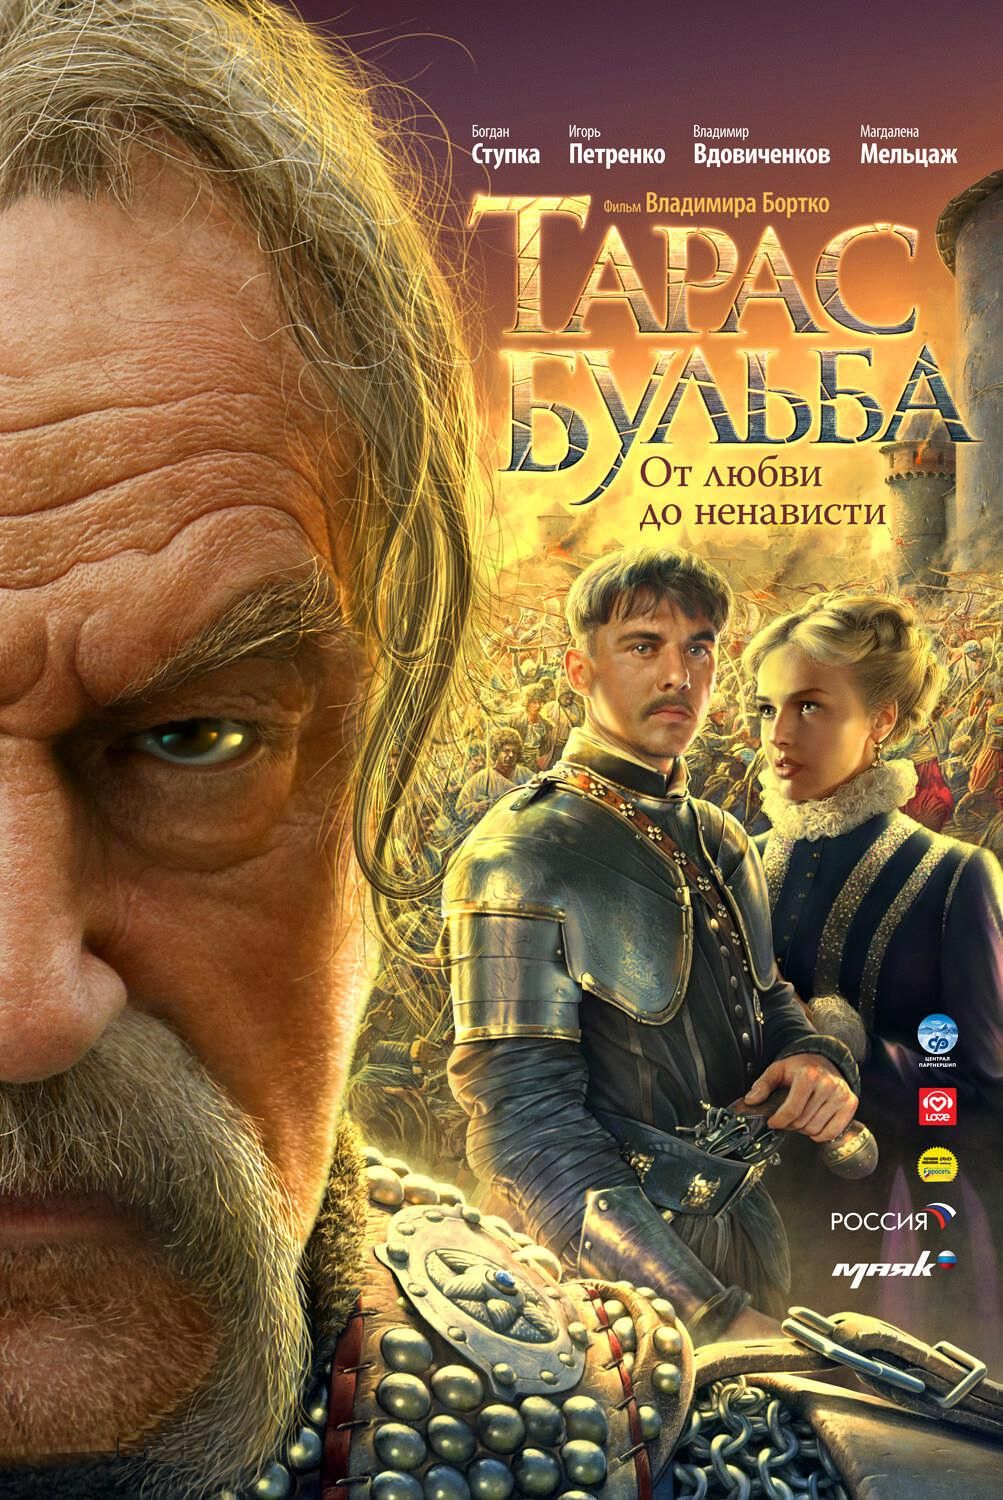 Taras Bulba movie